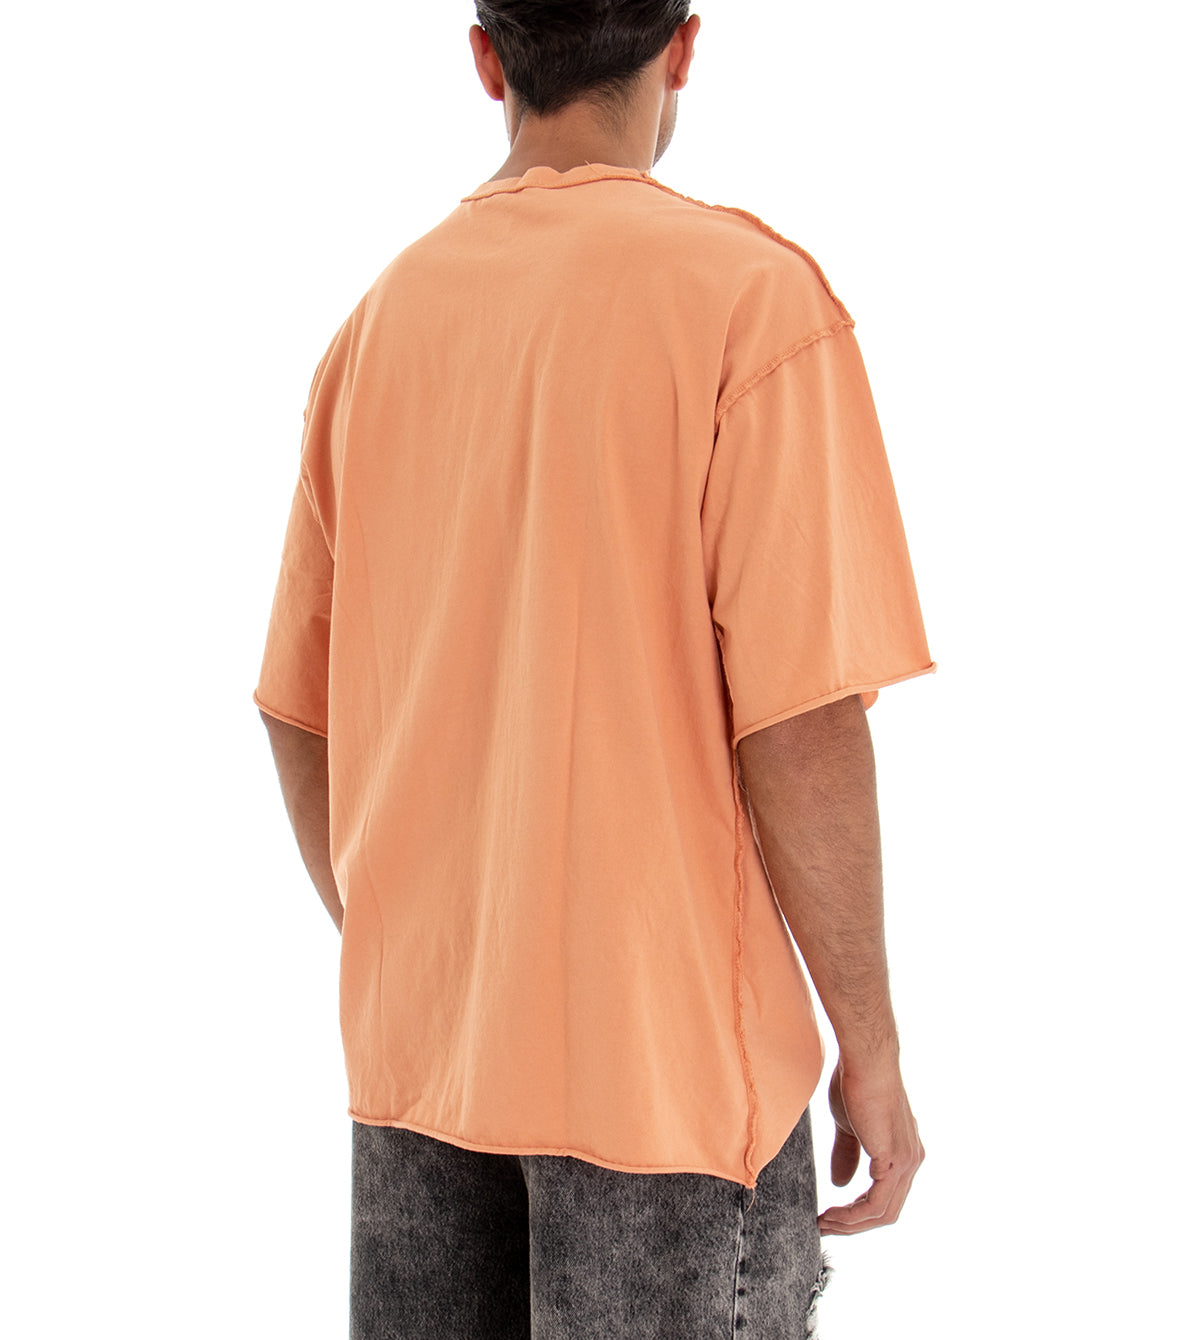 Men's T-shirt Short Sleeved Shirt Solid Color Salmon Crew Neck Breaks GIOSAL